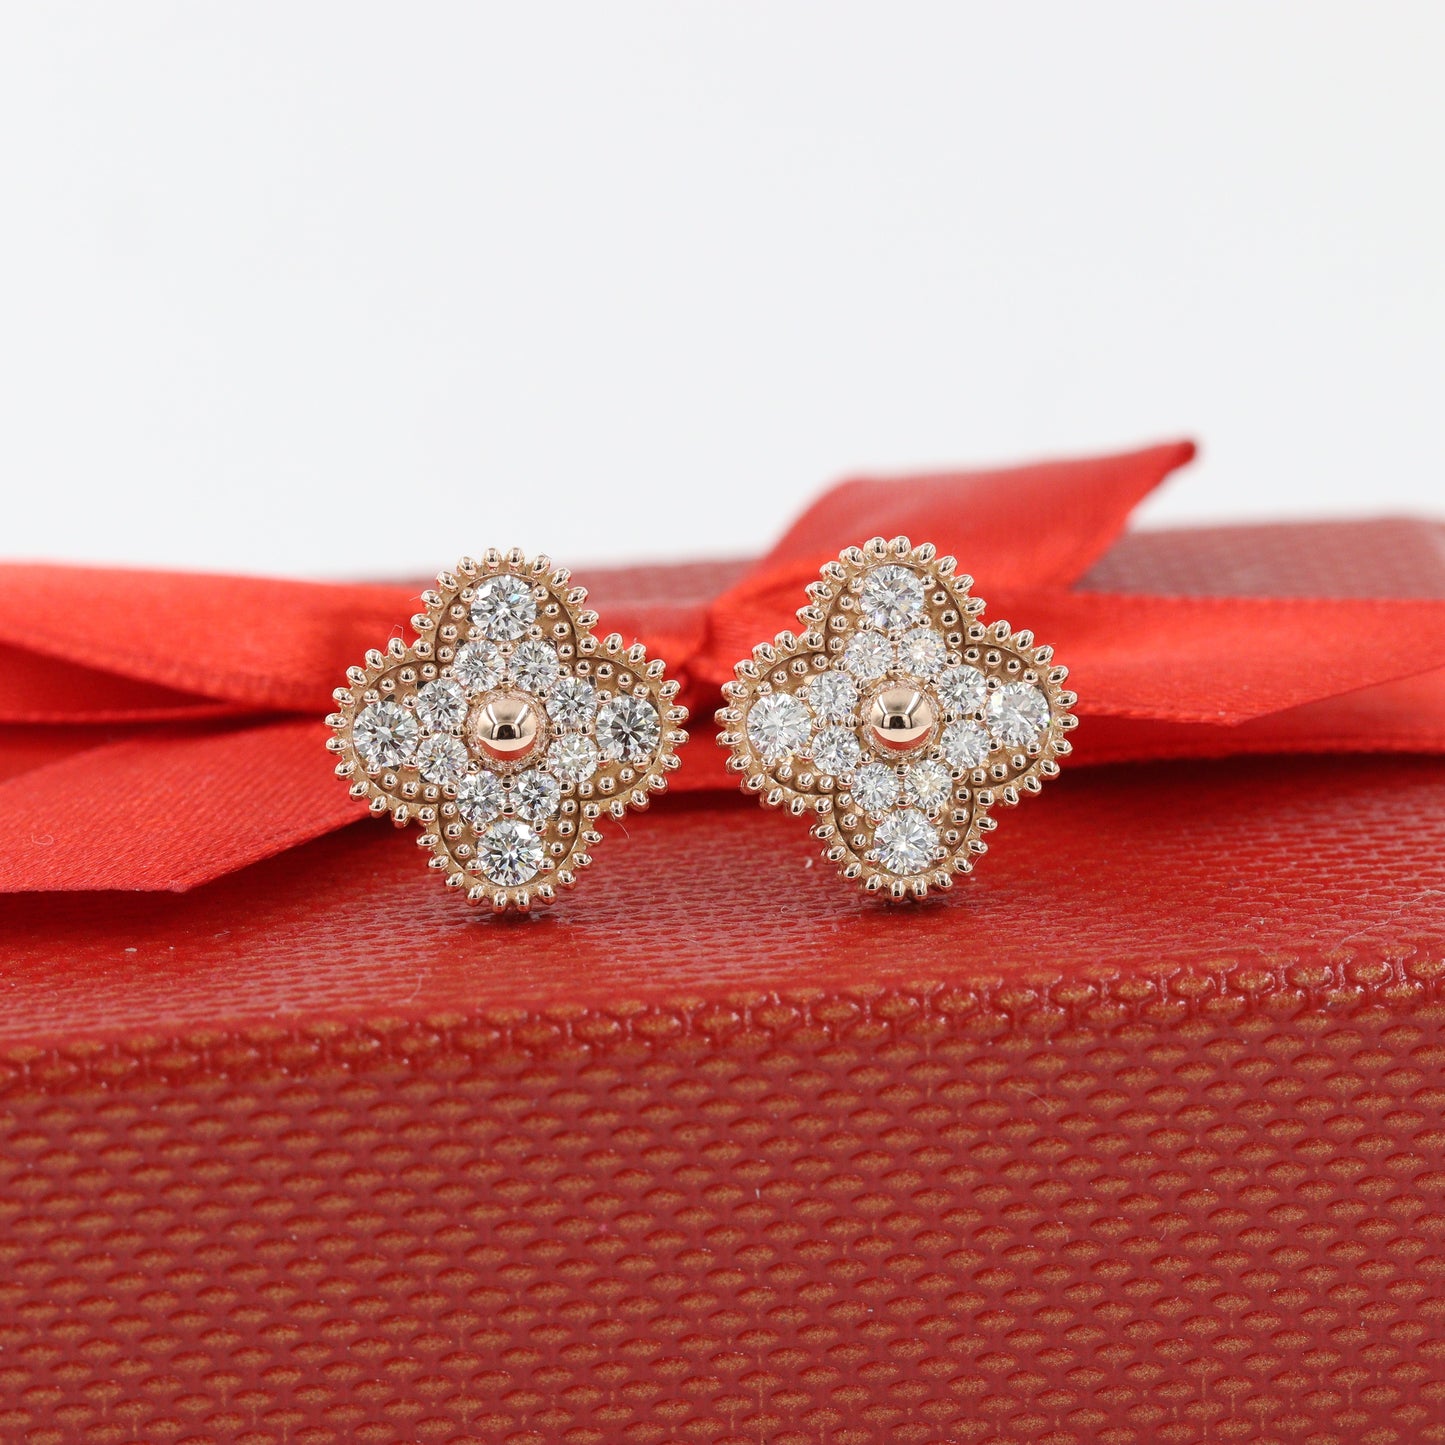 15mm Diamond Clover Earrings/ 14K and 18K Classic Clover Cluster Stud Earrings/ Natural Diamonds/ Pair 1.1ctw/ Anniversary Gift